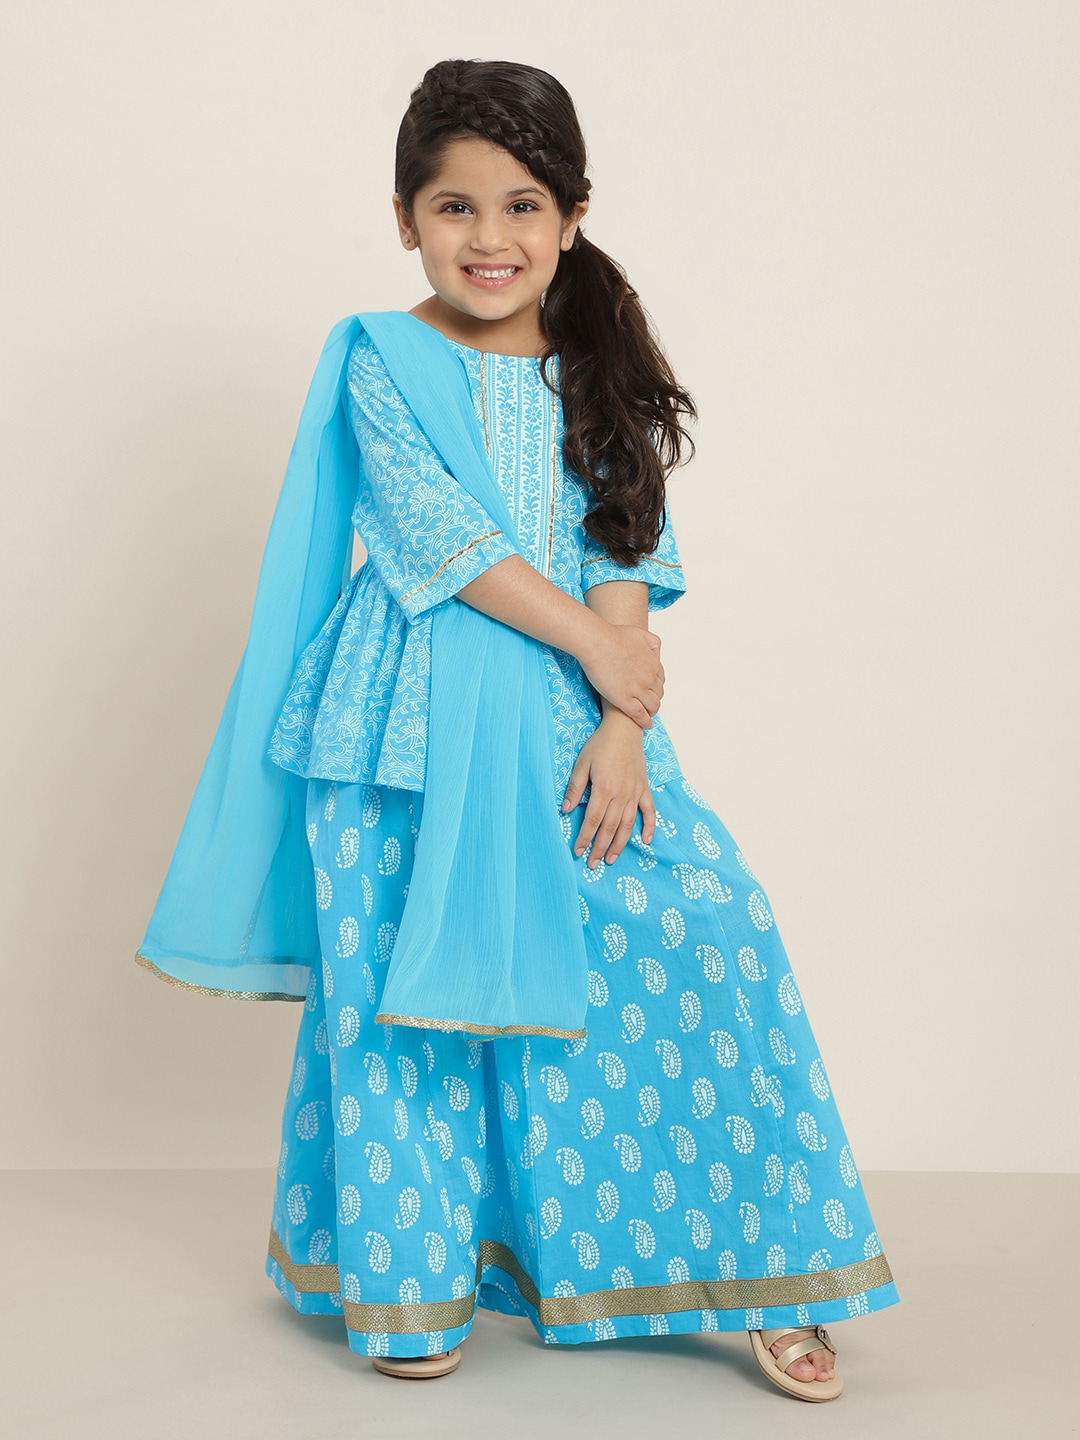 Sangria Girls Blue & White Ethnic Motifs Print Pure Cotton Ready to Wear Lehenga Choli Price in India